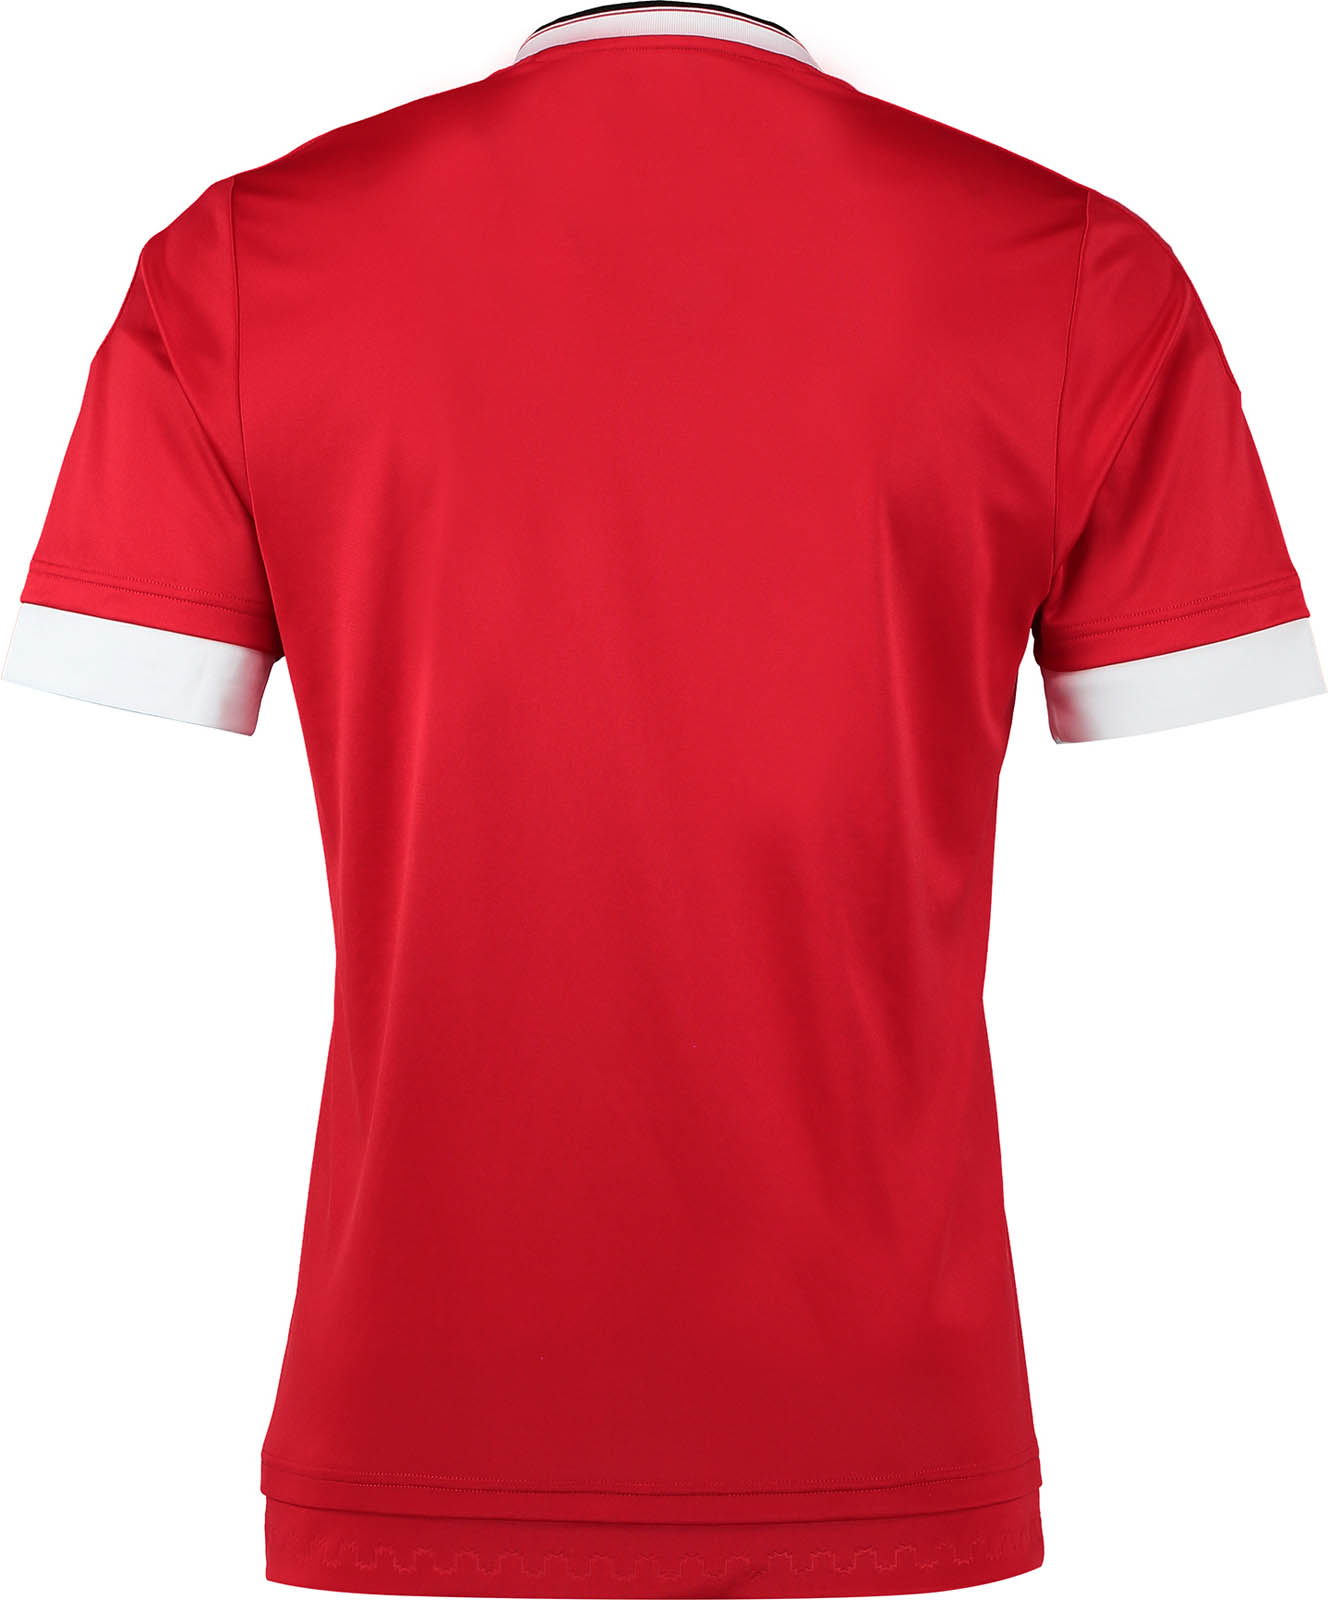 Форма без сайта. Adidas ac1414. Белая майка Манчестер Юнайтед. Красная футбольная футболка. Красно белая футболка.